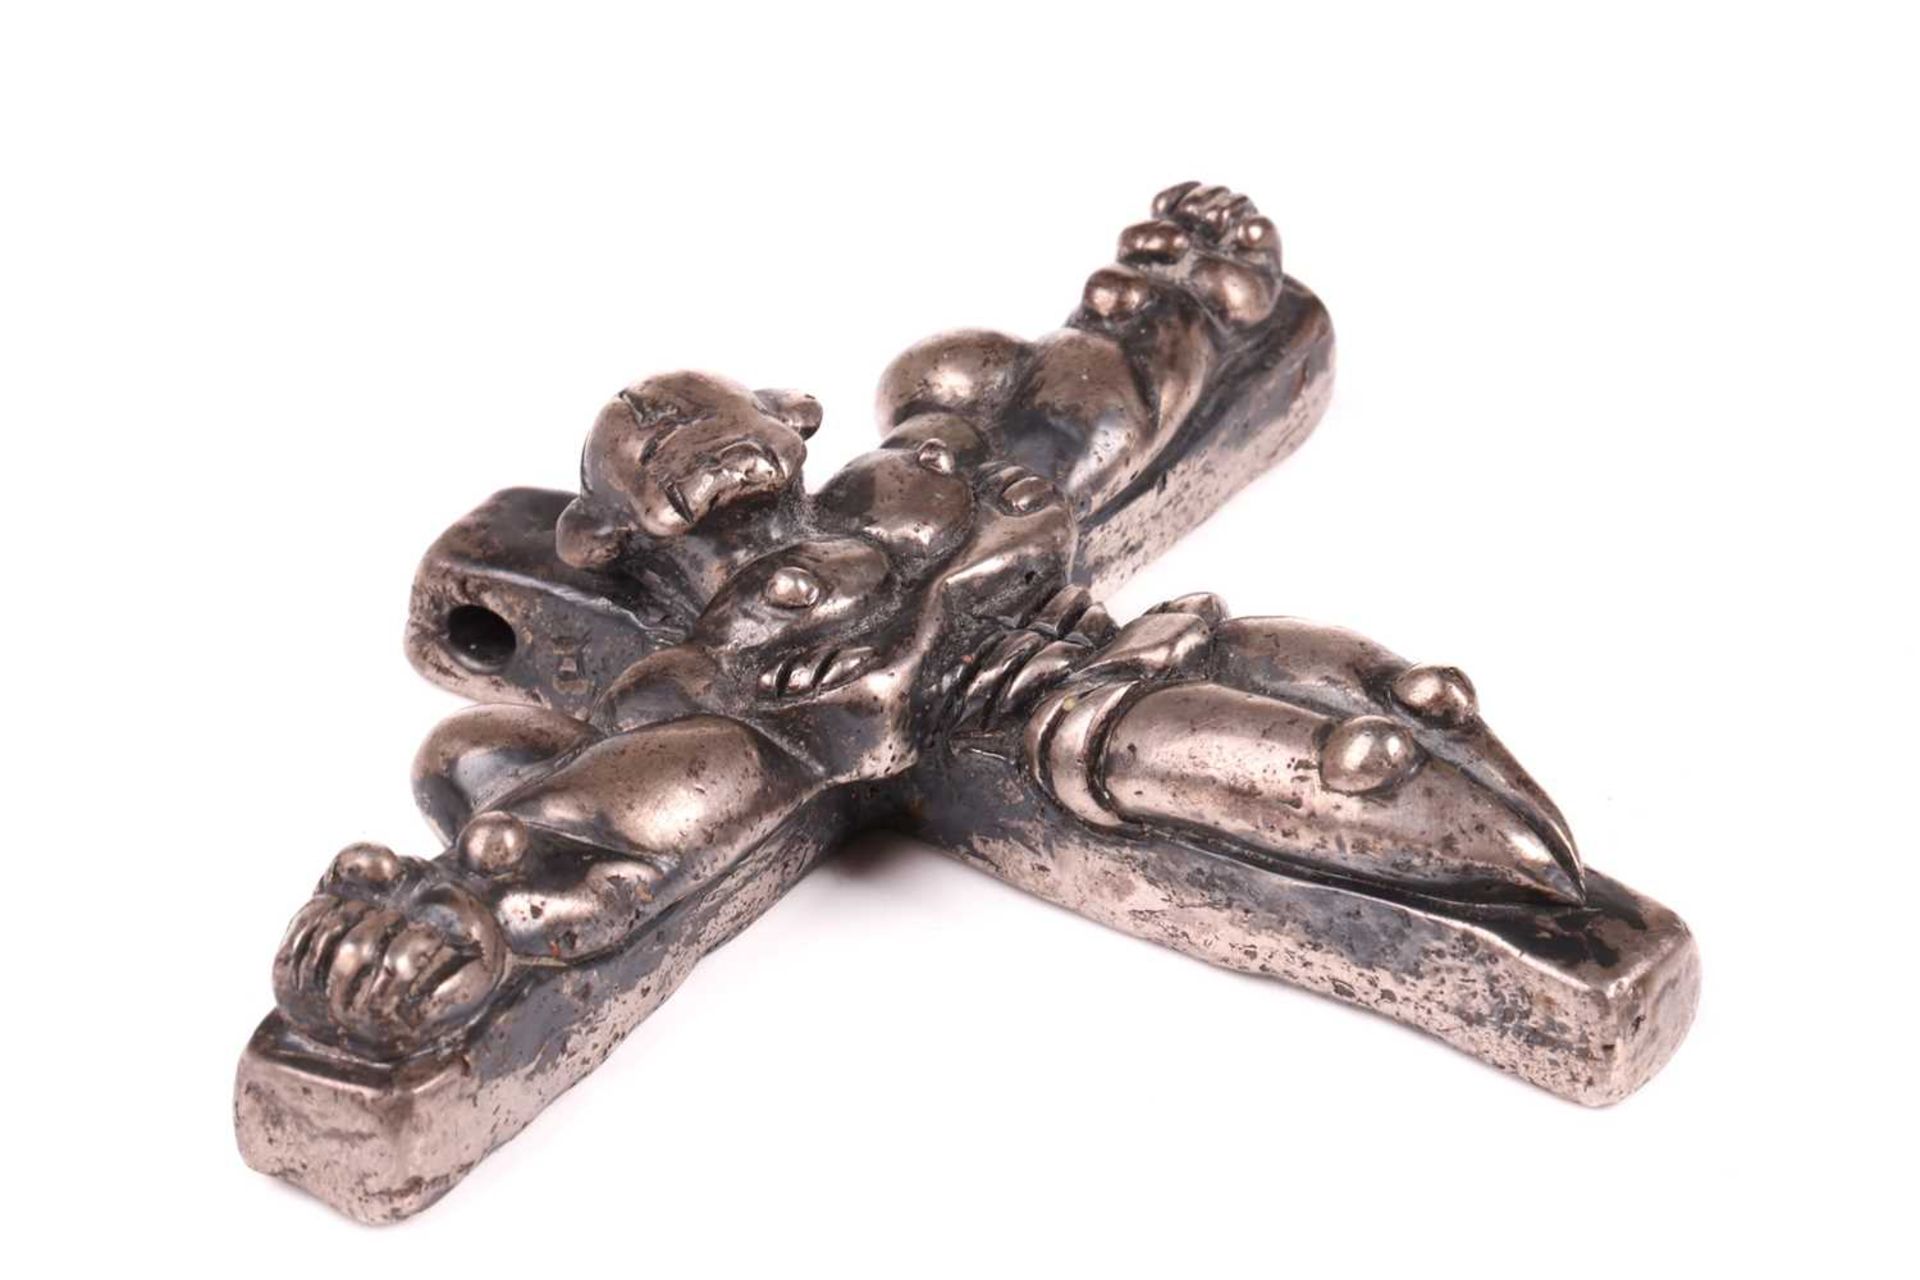 A Mykola Solonair (Contemporary Ukrainian/British) a contemporary heavy-cast silver crucifix pendant - Image 4 of 9